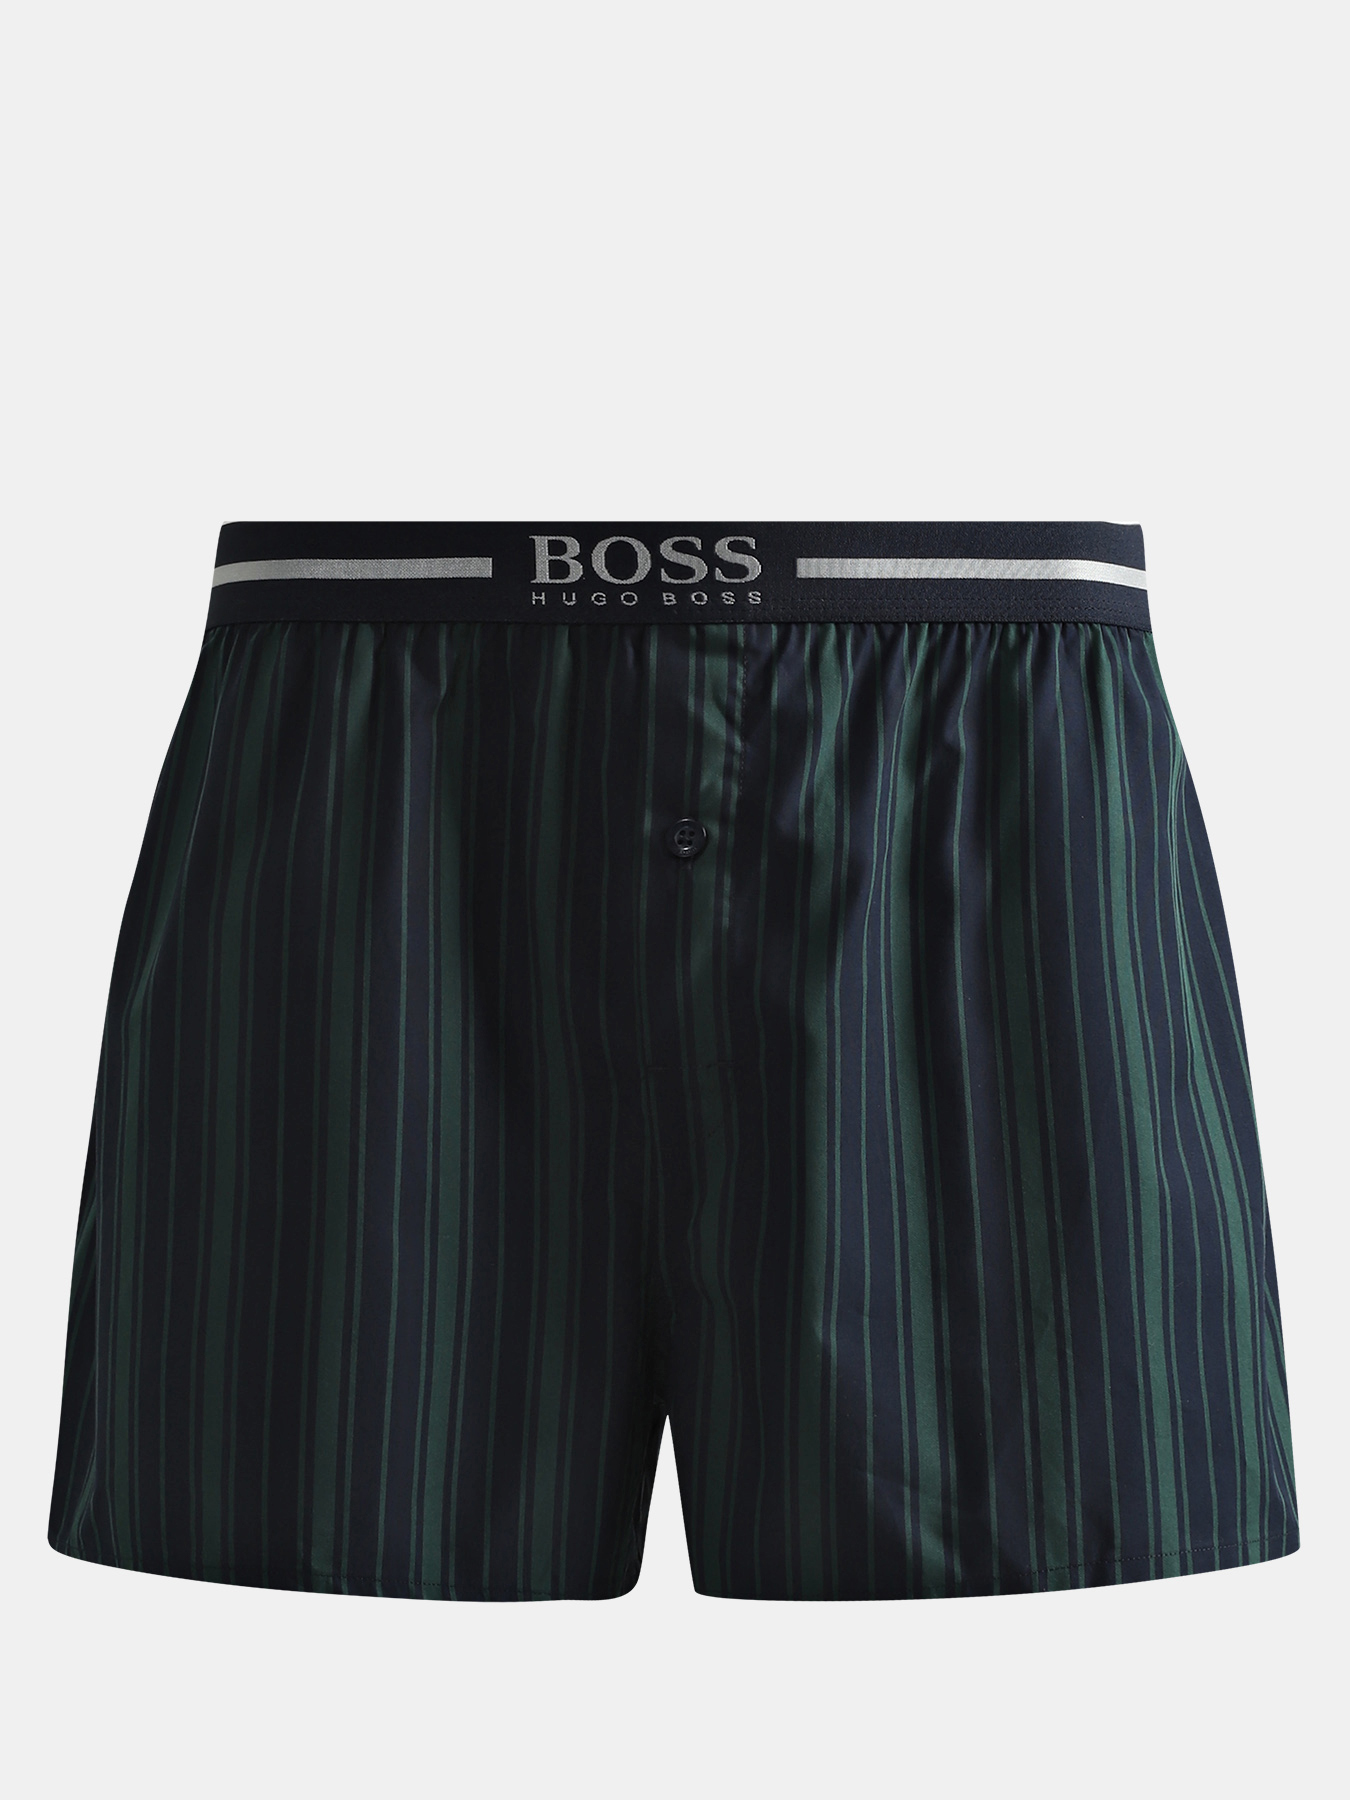 BOSS Трусы Boxer Shorts (2 шт) 359836-045